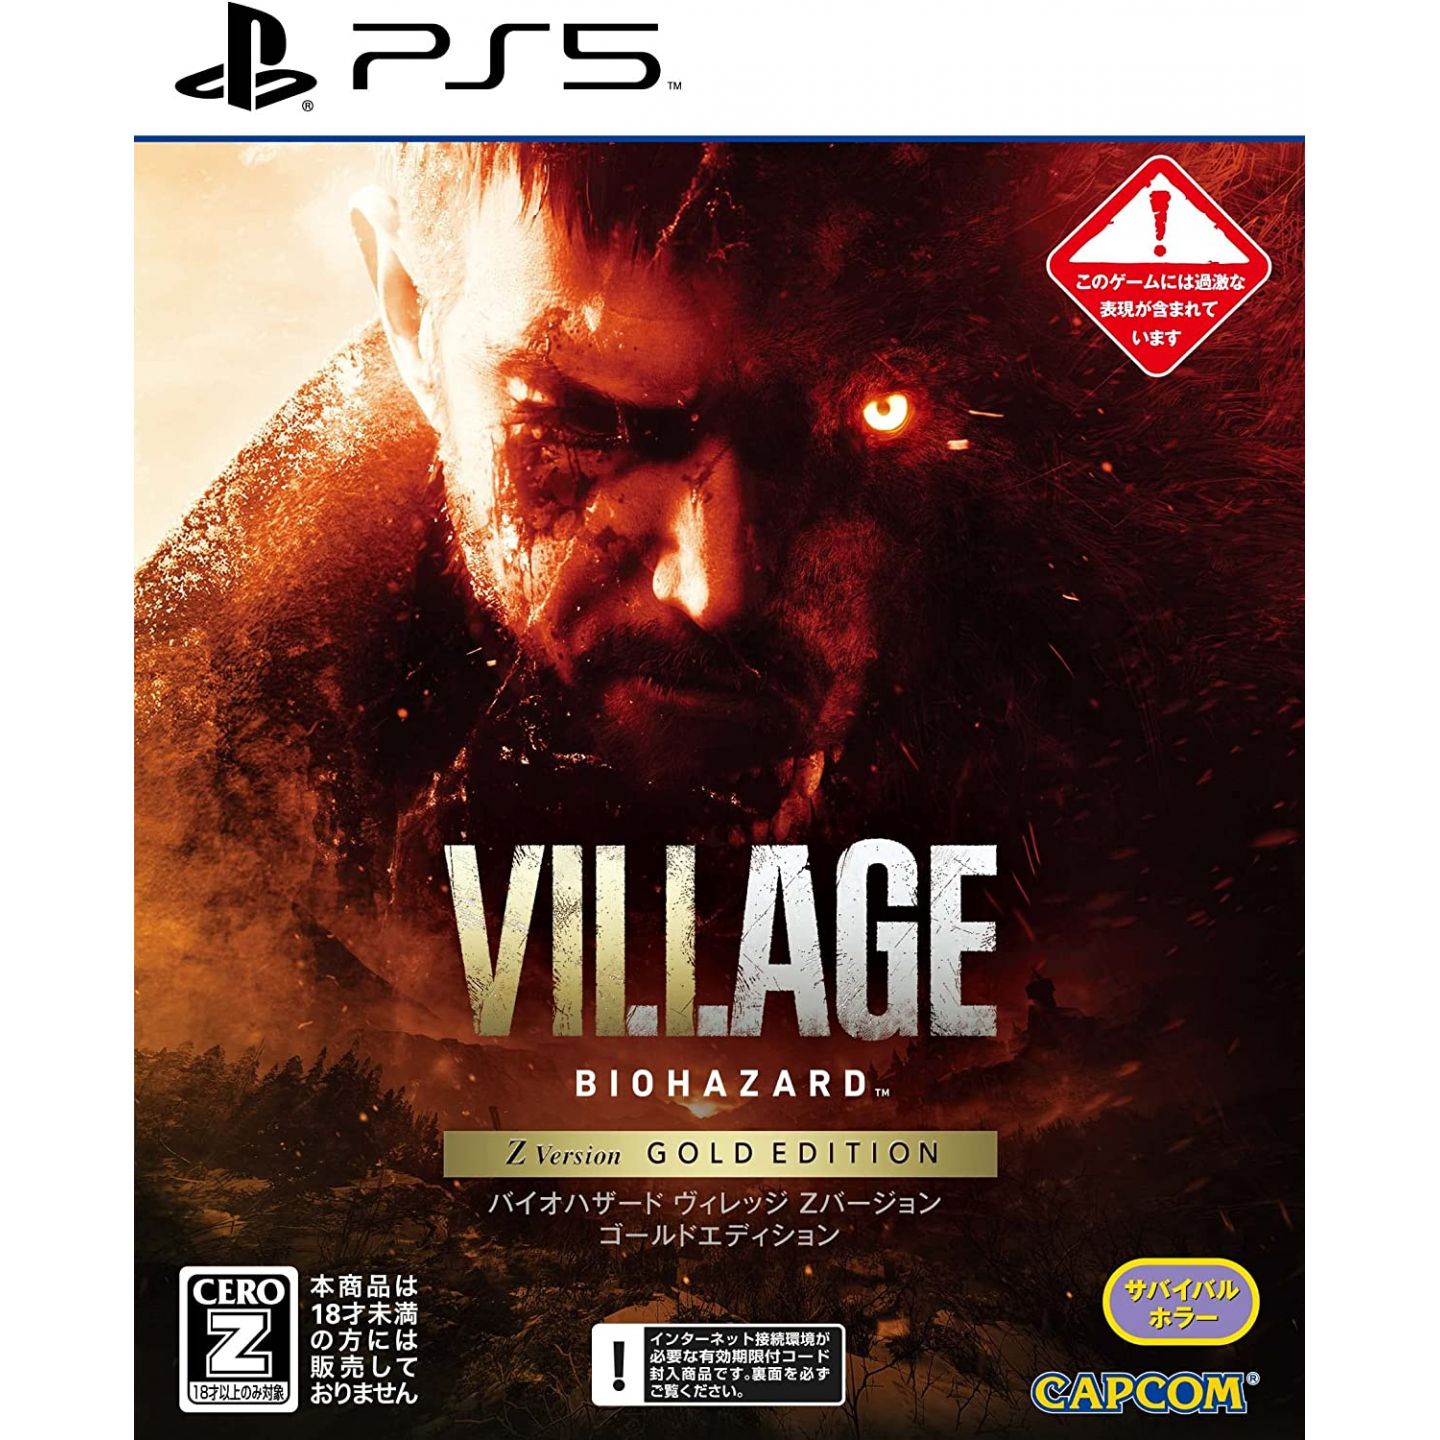 CAPCOM - Biohazard (Resident Evil) Village Z Version Gold Edition